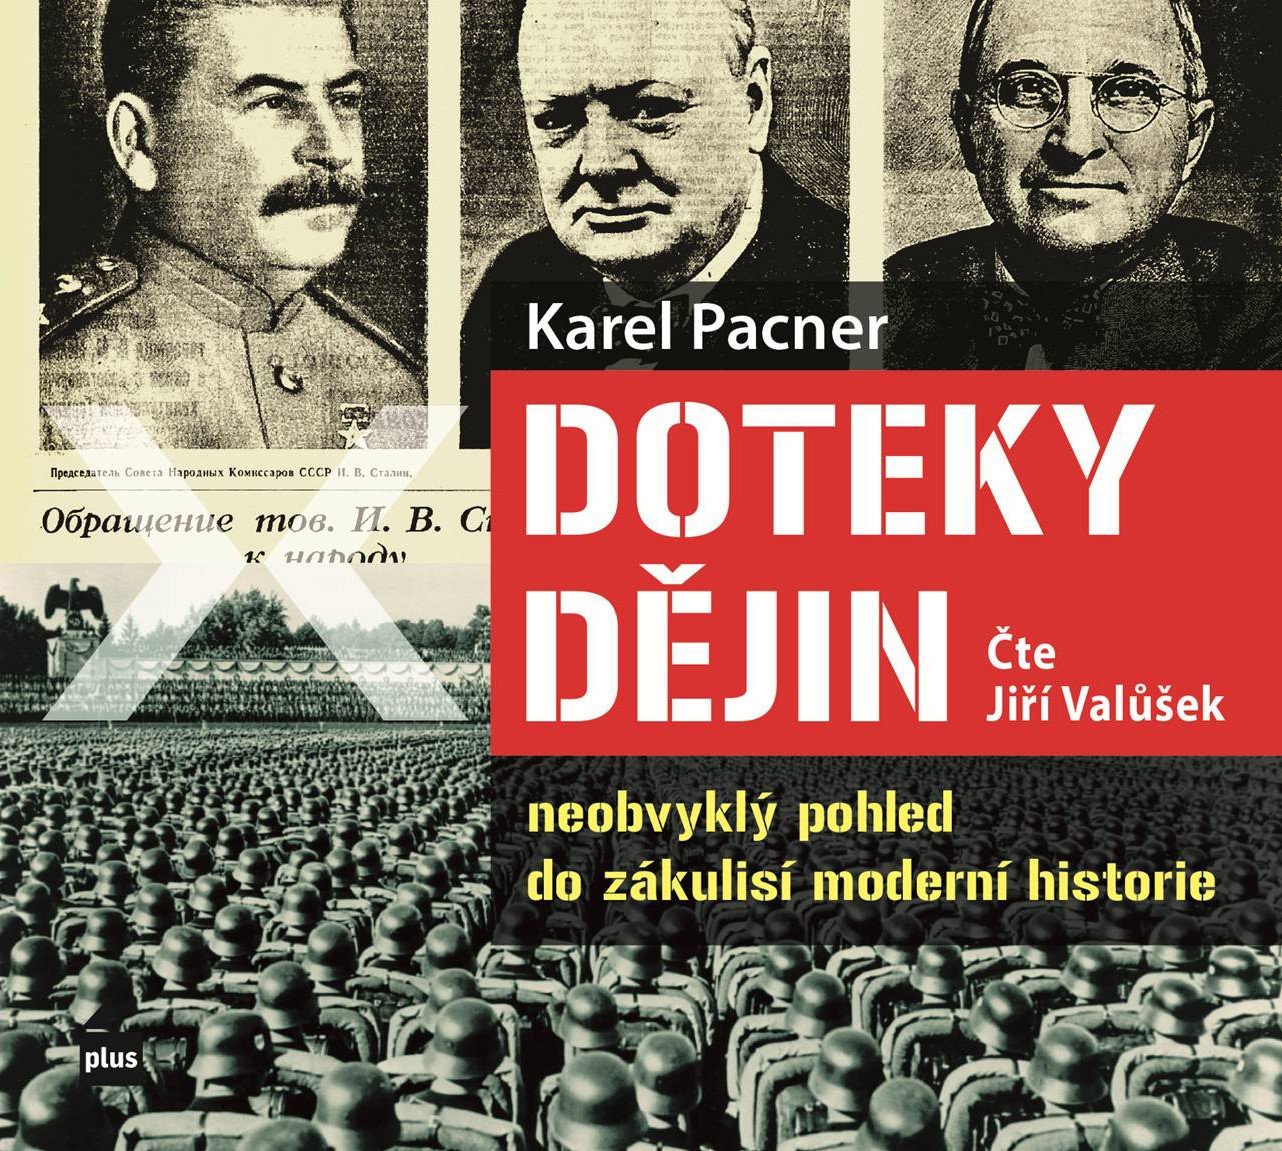 Doteky dějin - CDmp3 (Čte Vladimír Hauser) - Karel Pacner